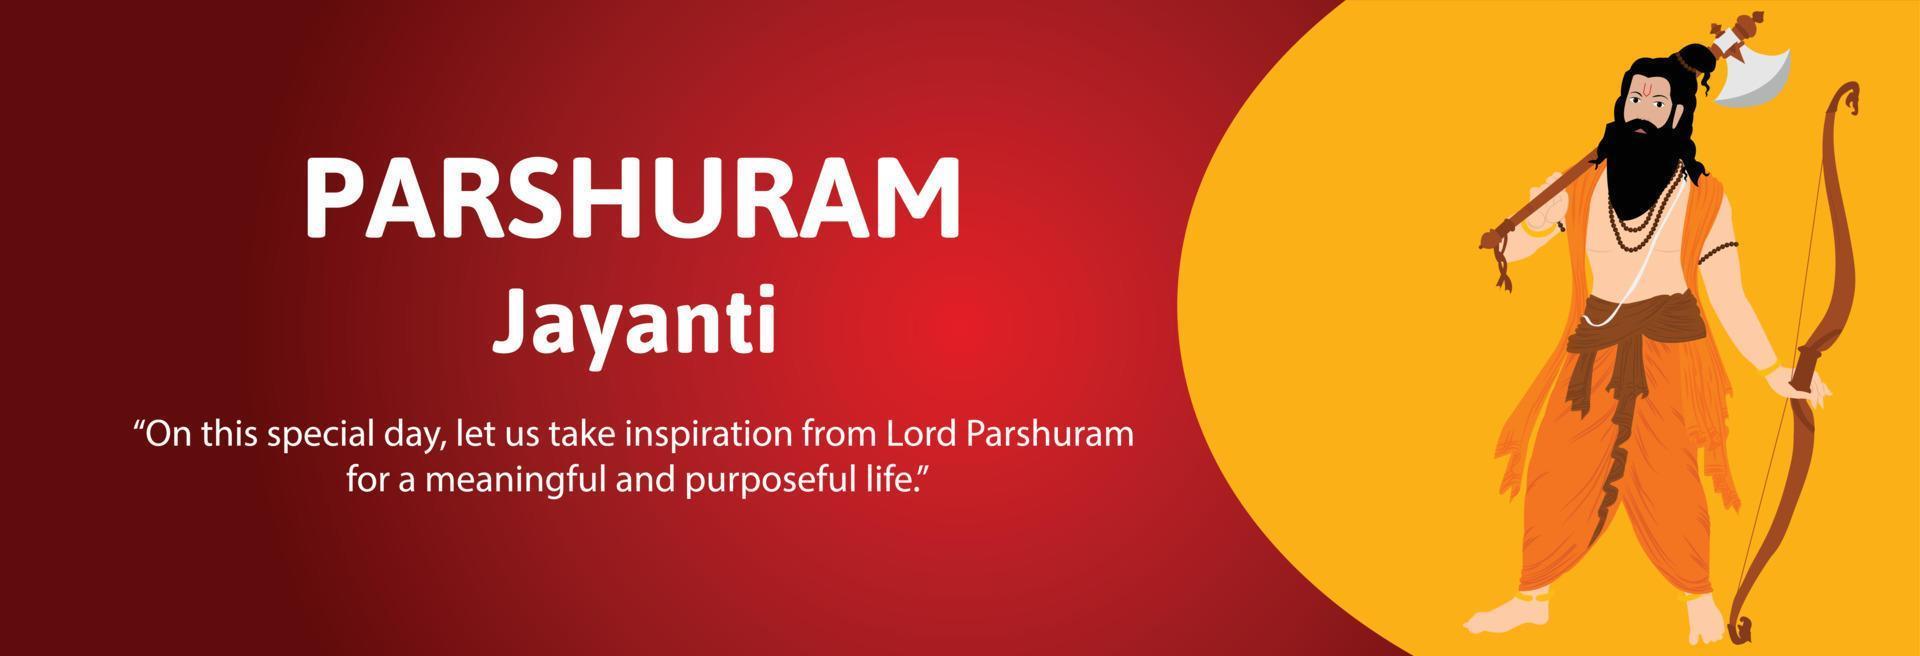 parshuram Jayanti heer parasurama Indisch Hindoe festival viering vector illustraties